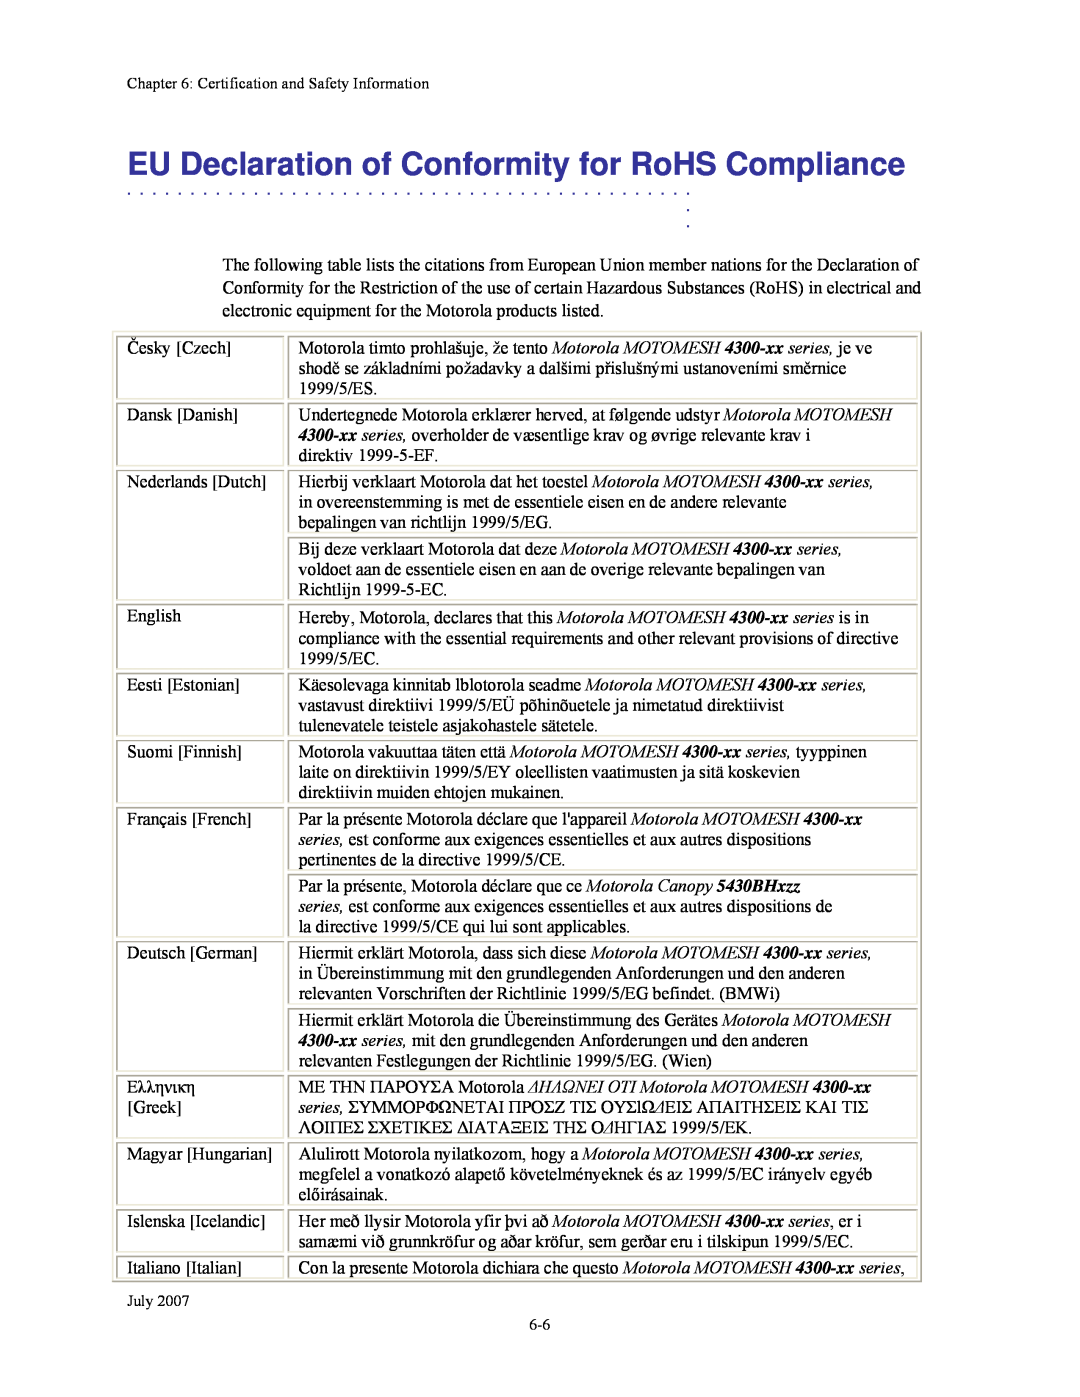 Nikon 4300 manual EU Declaration of Conformity for RoHS Compliance 